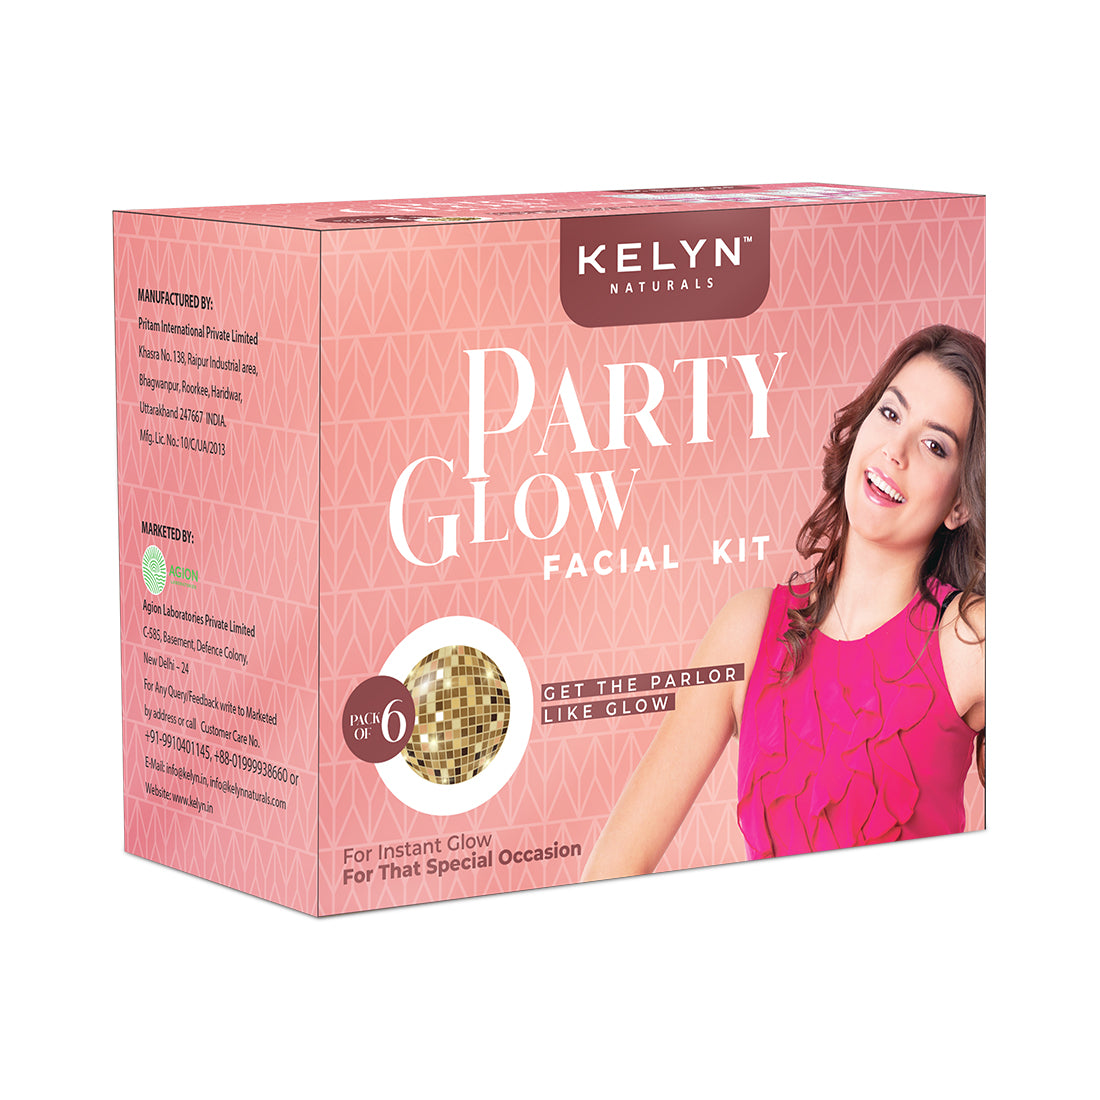 Kelyn Party Glow Facial Kit (Pack of 6) - 60g